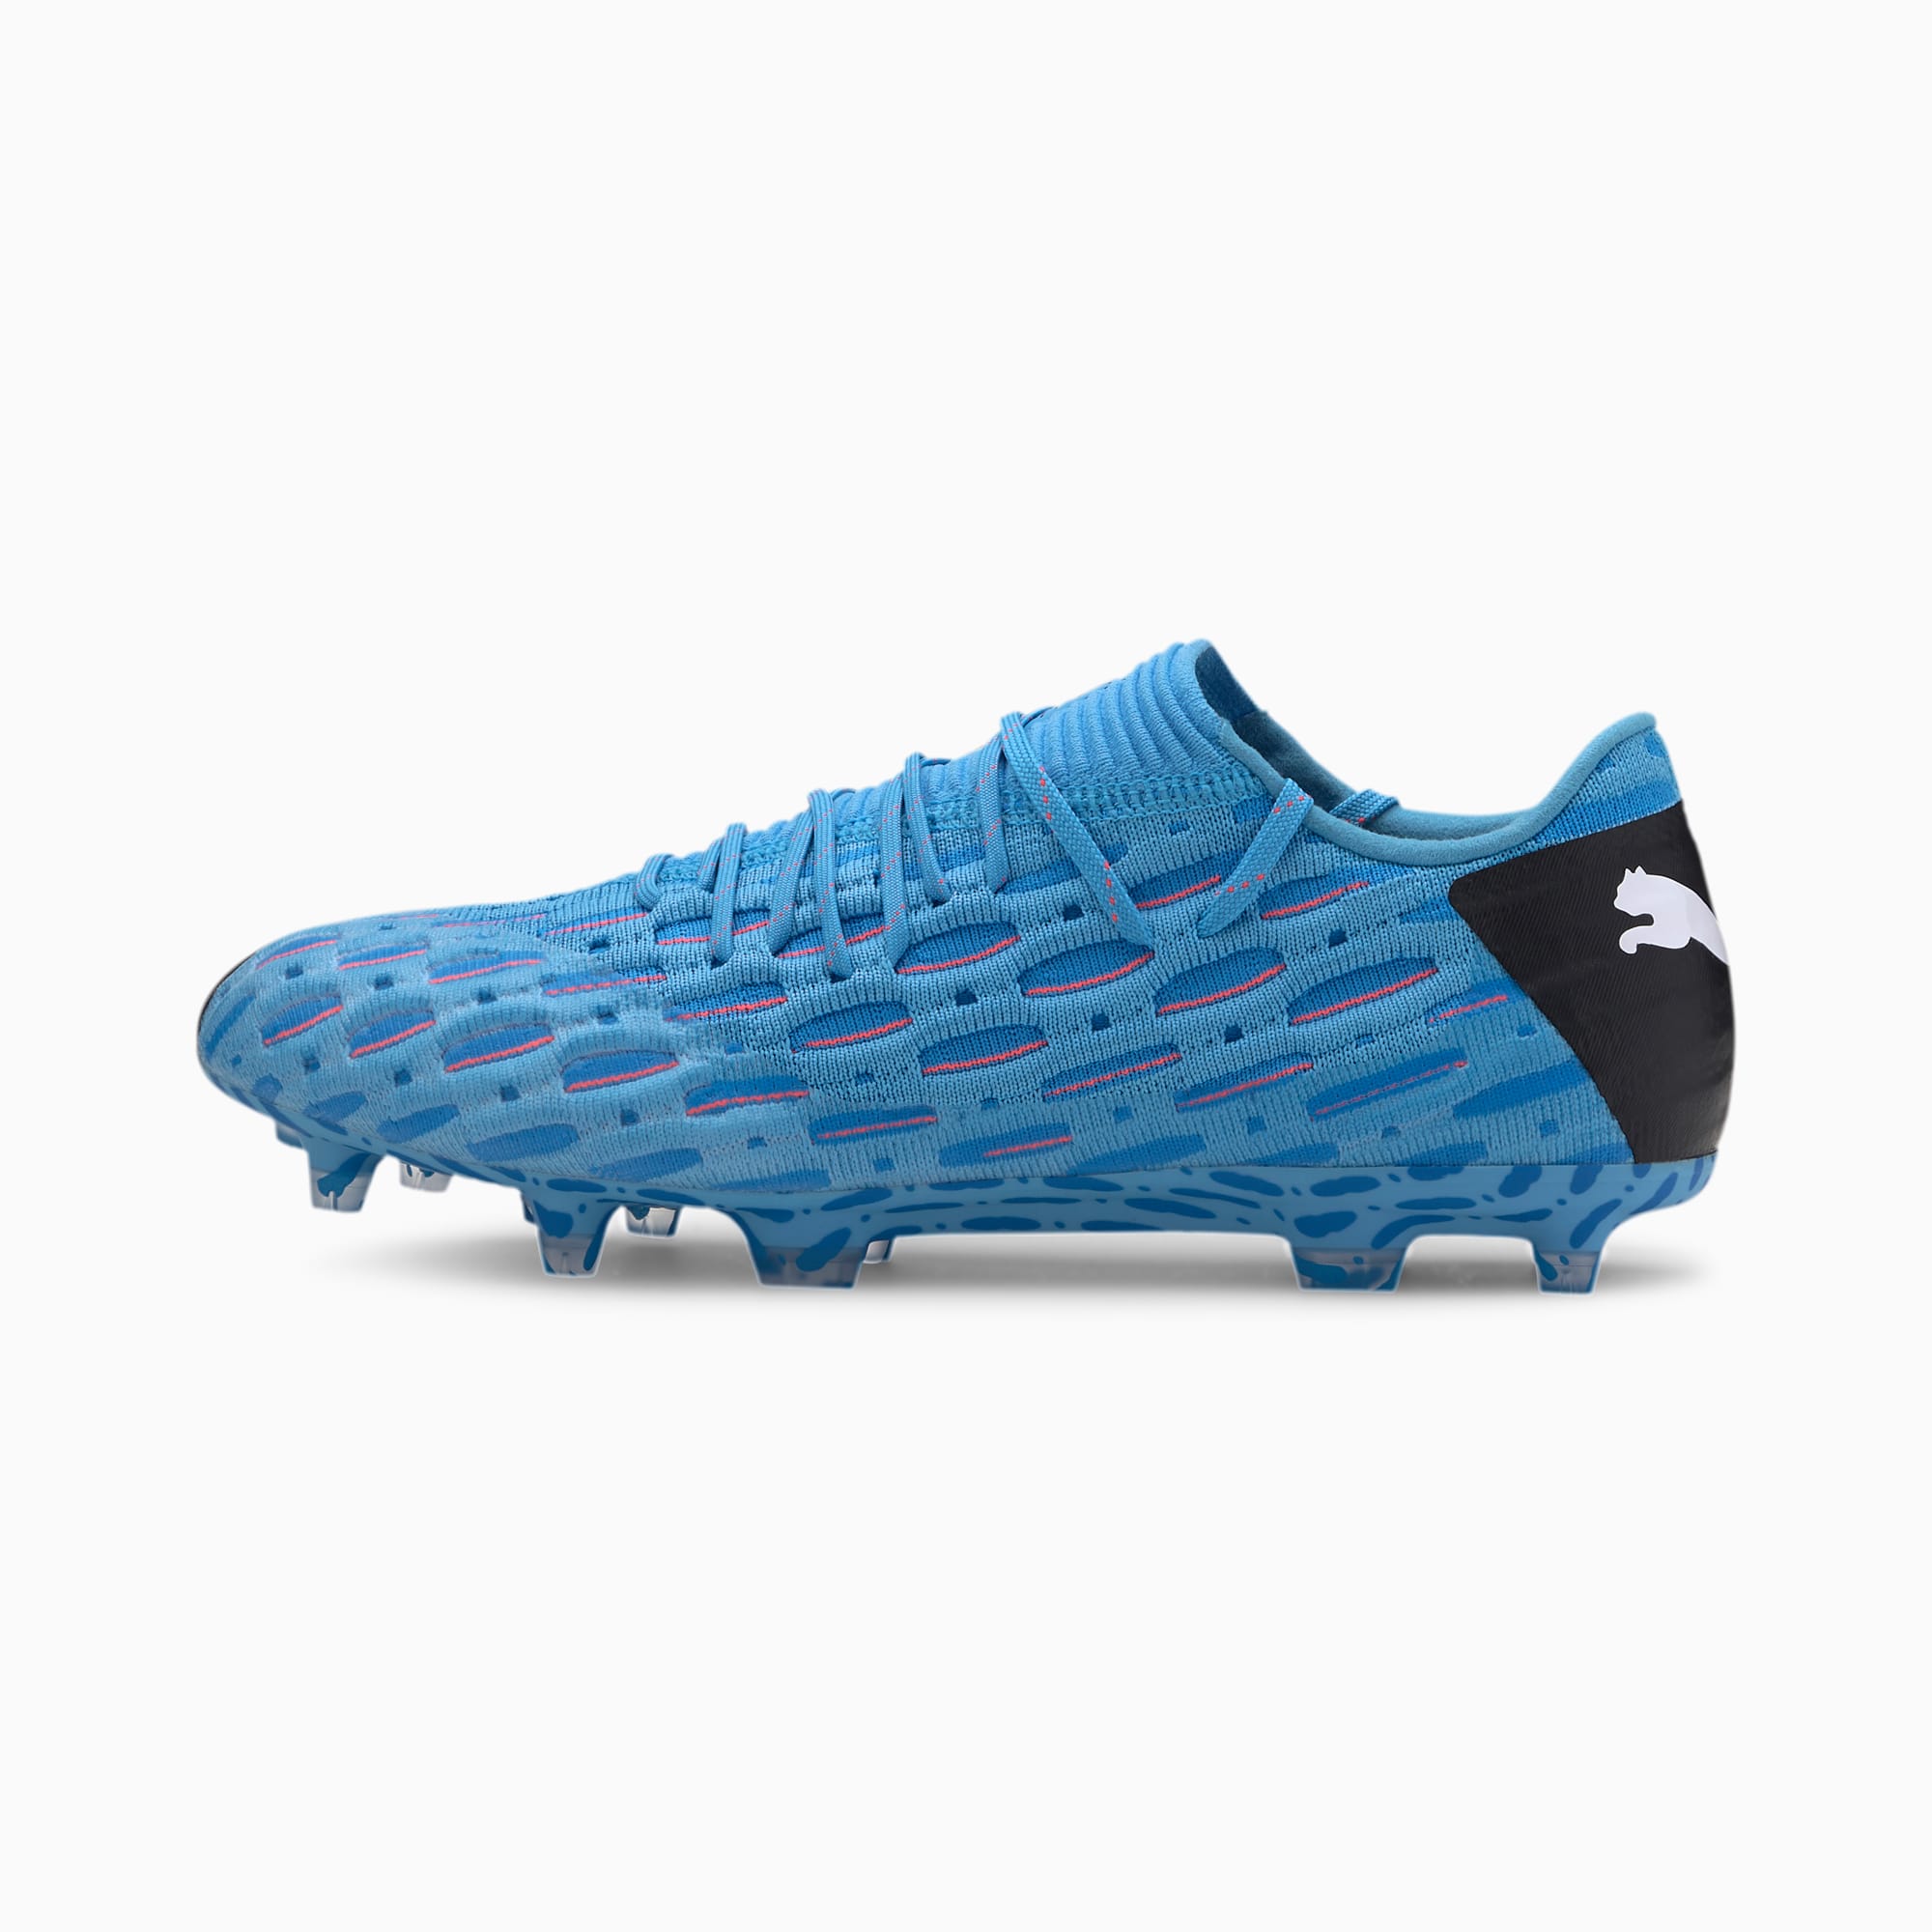 Future 5 1 Netfit Low Fg Ag Men S Football Boots Blue Nrgy Blue